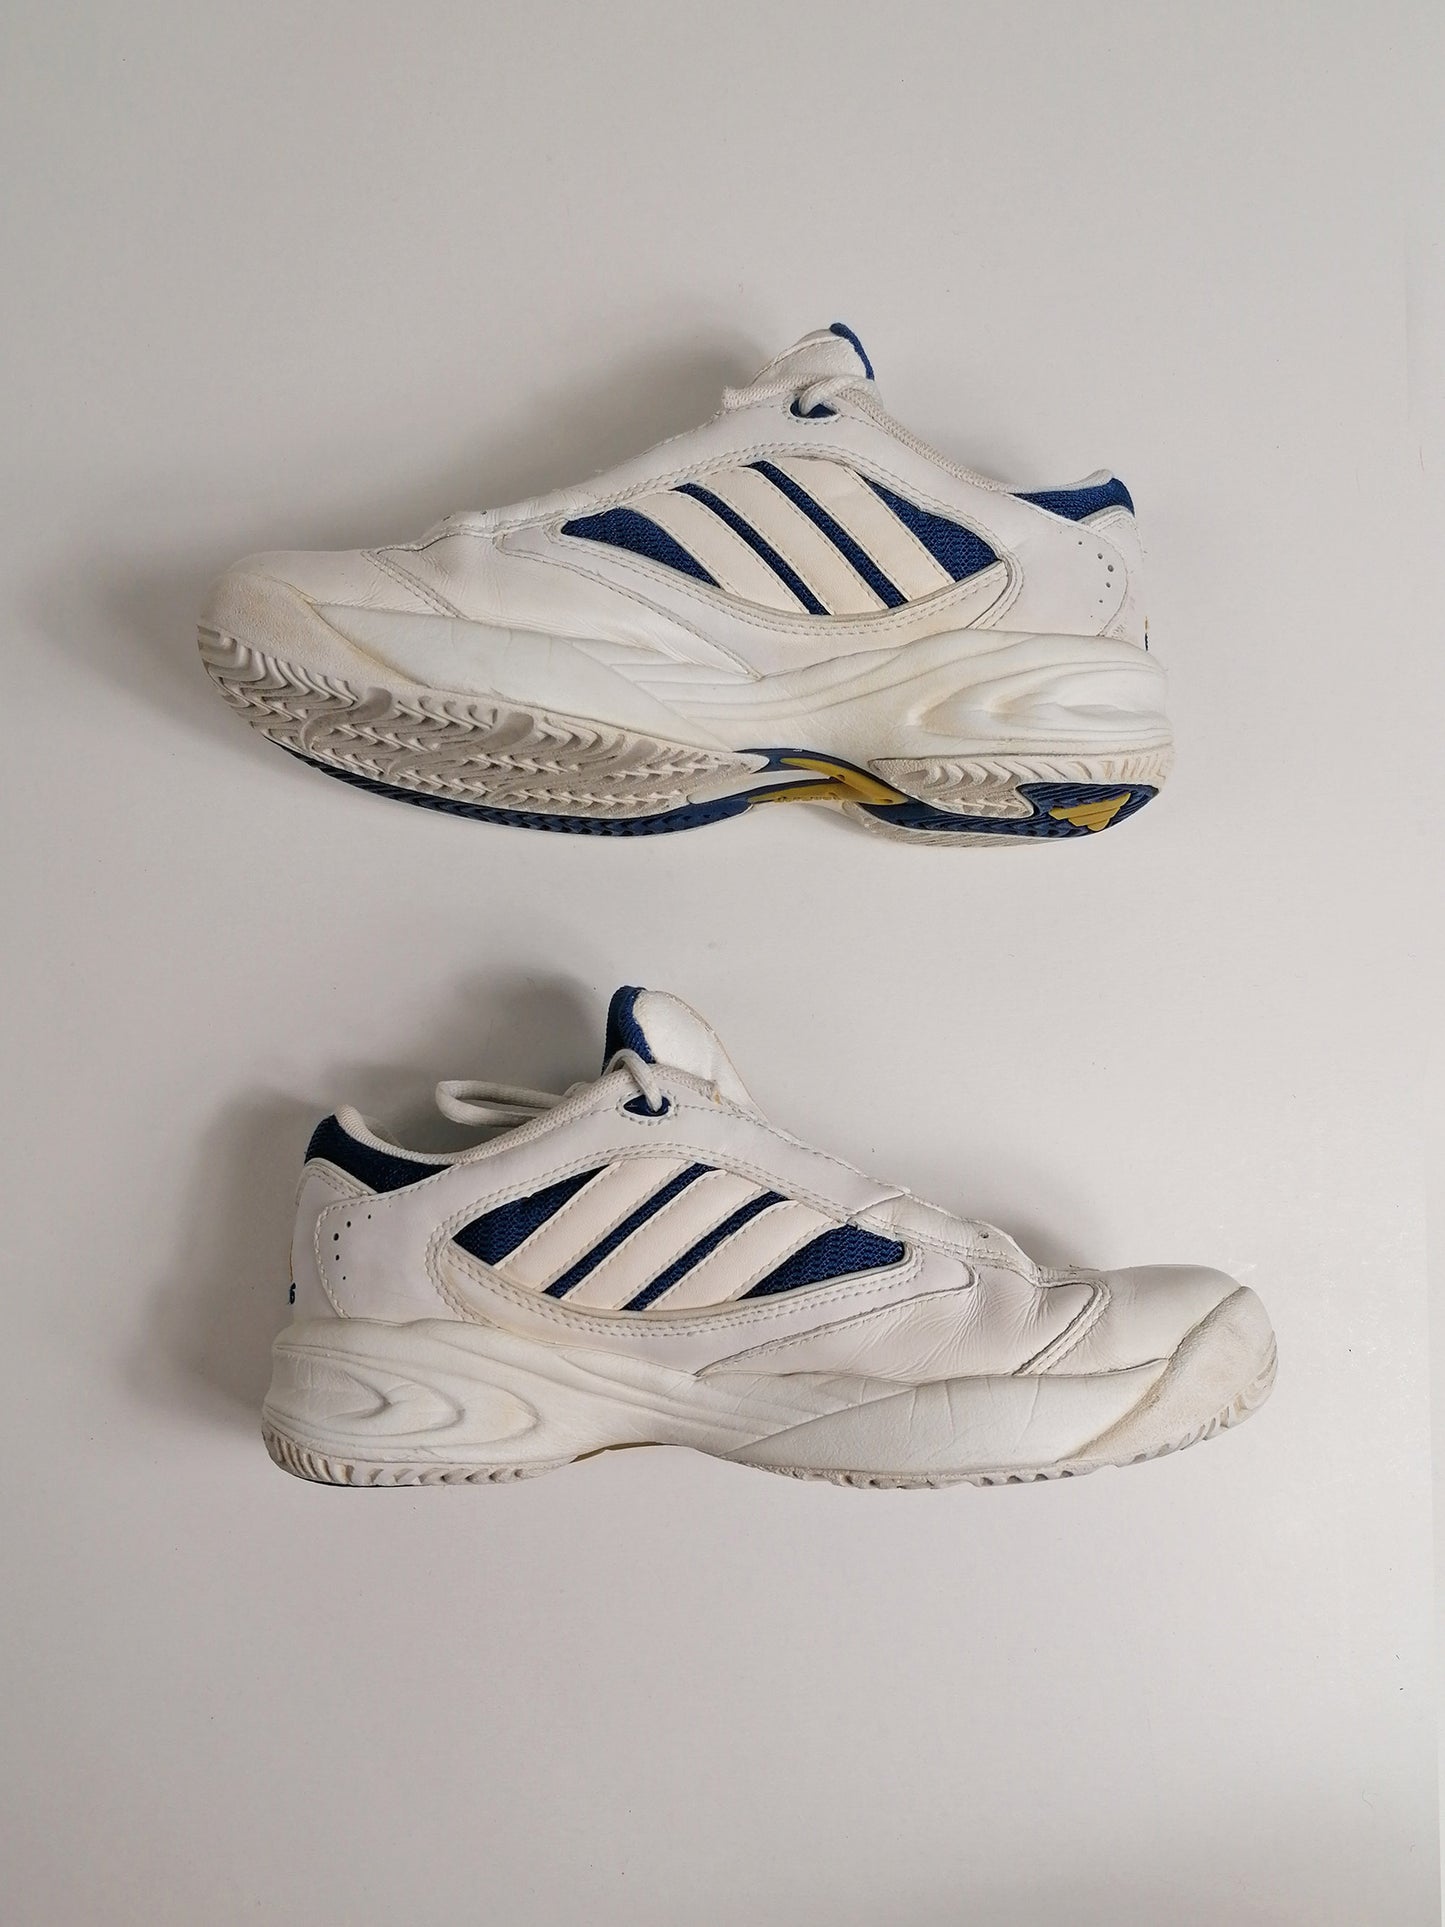 1999 ADIDAS Torsion White Sneakers - size UK 5.5 / EU 38 2/3 / Us 7 / 24 cm